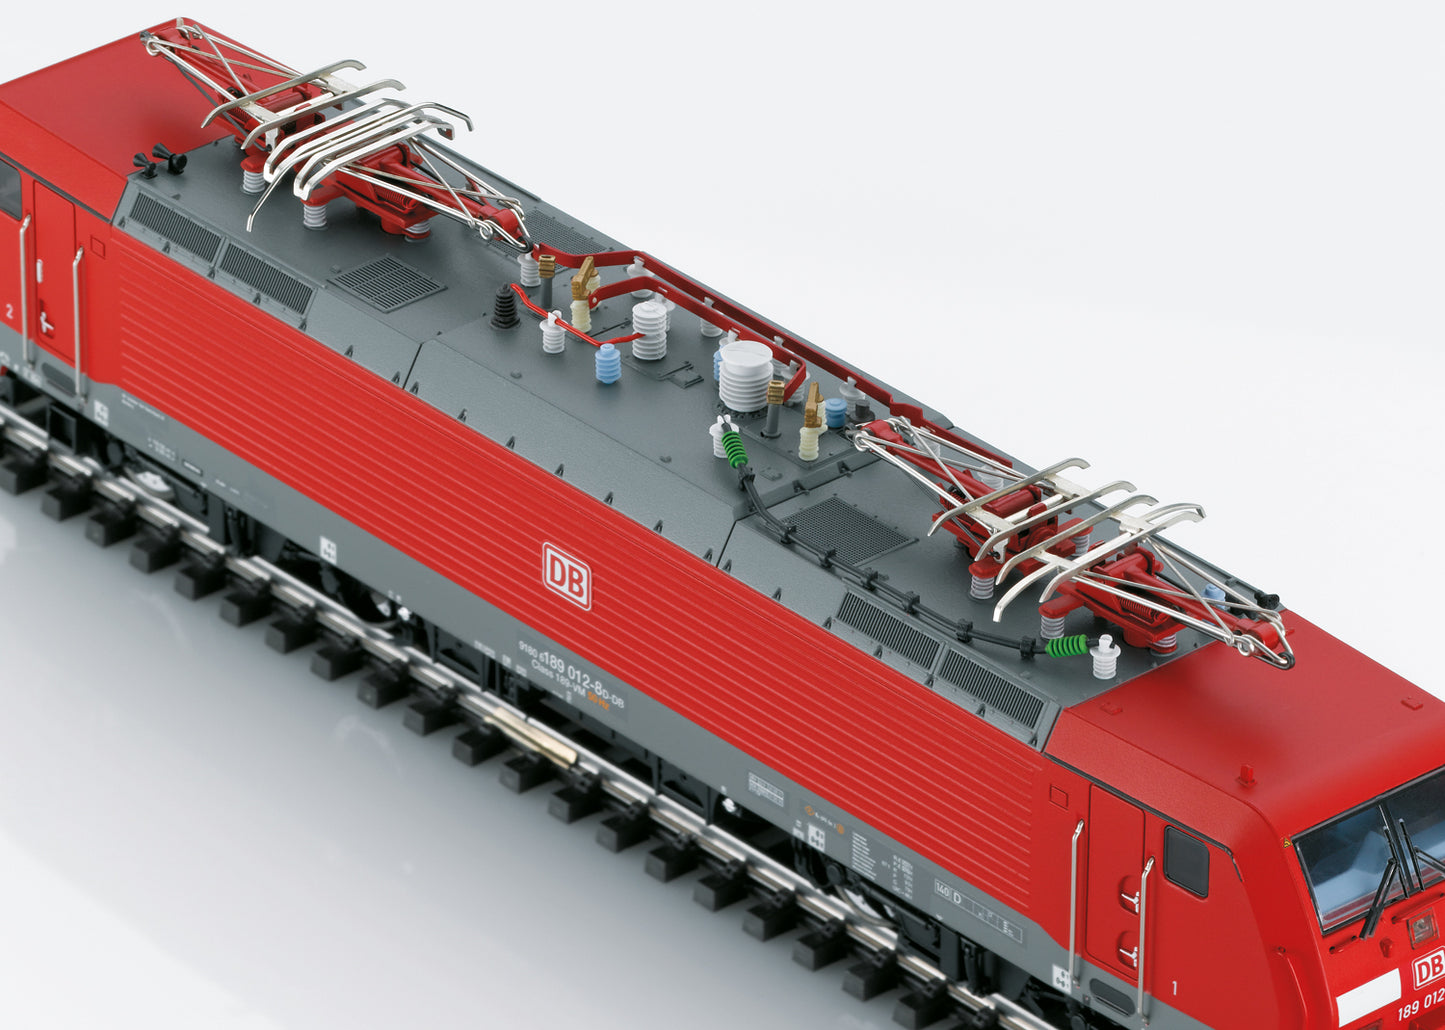 Trix HO 22800 Electric Locomotive BR 189, DB, Ep. VI 2021 New Item